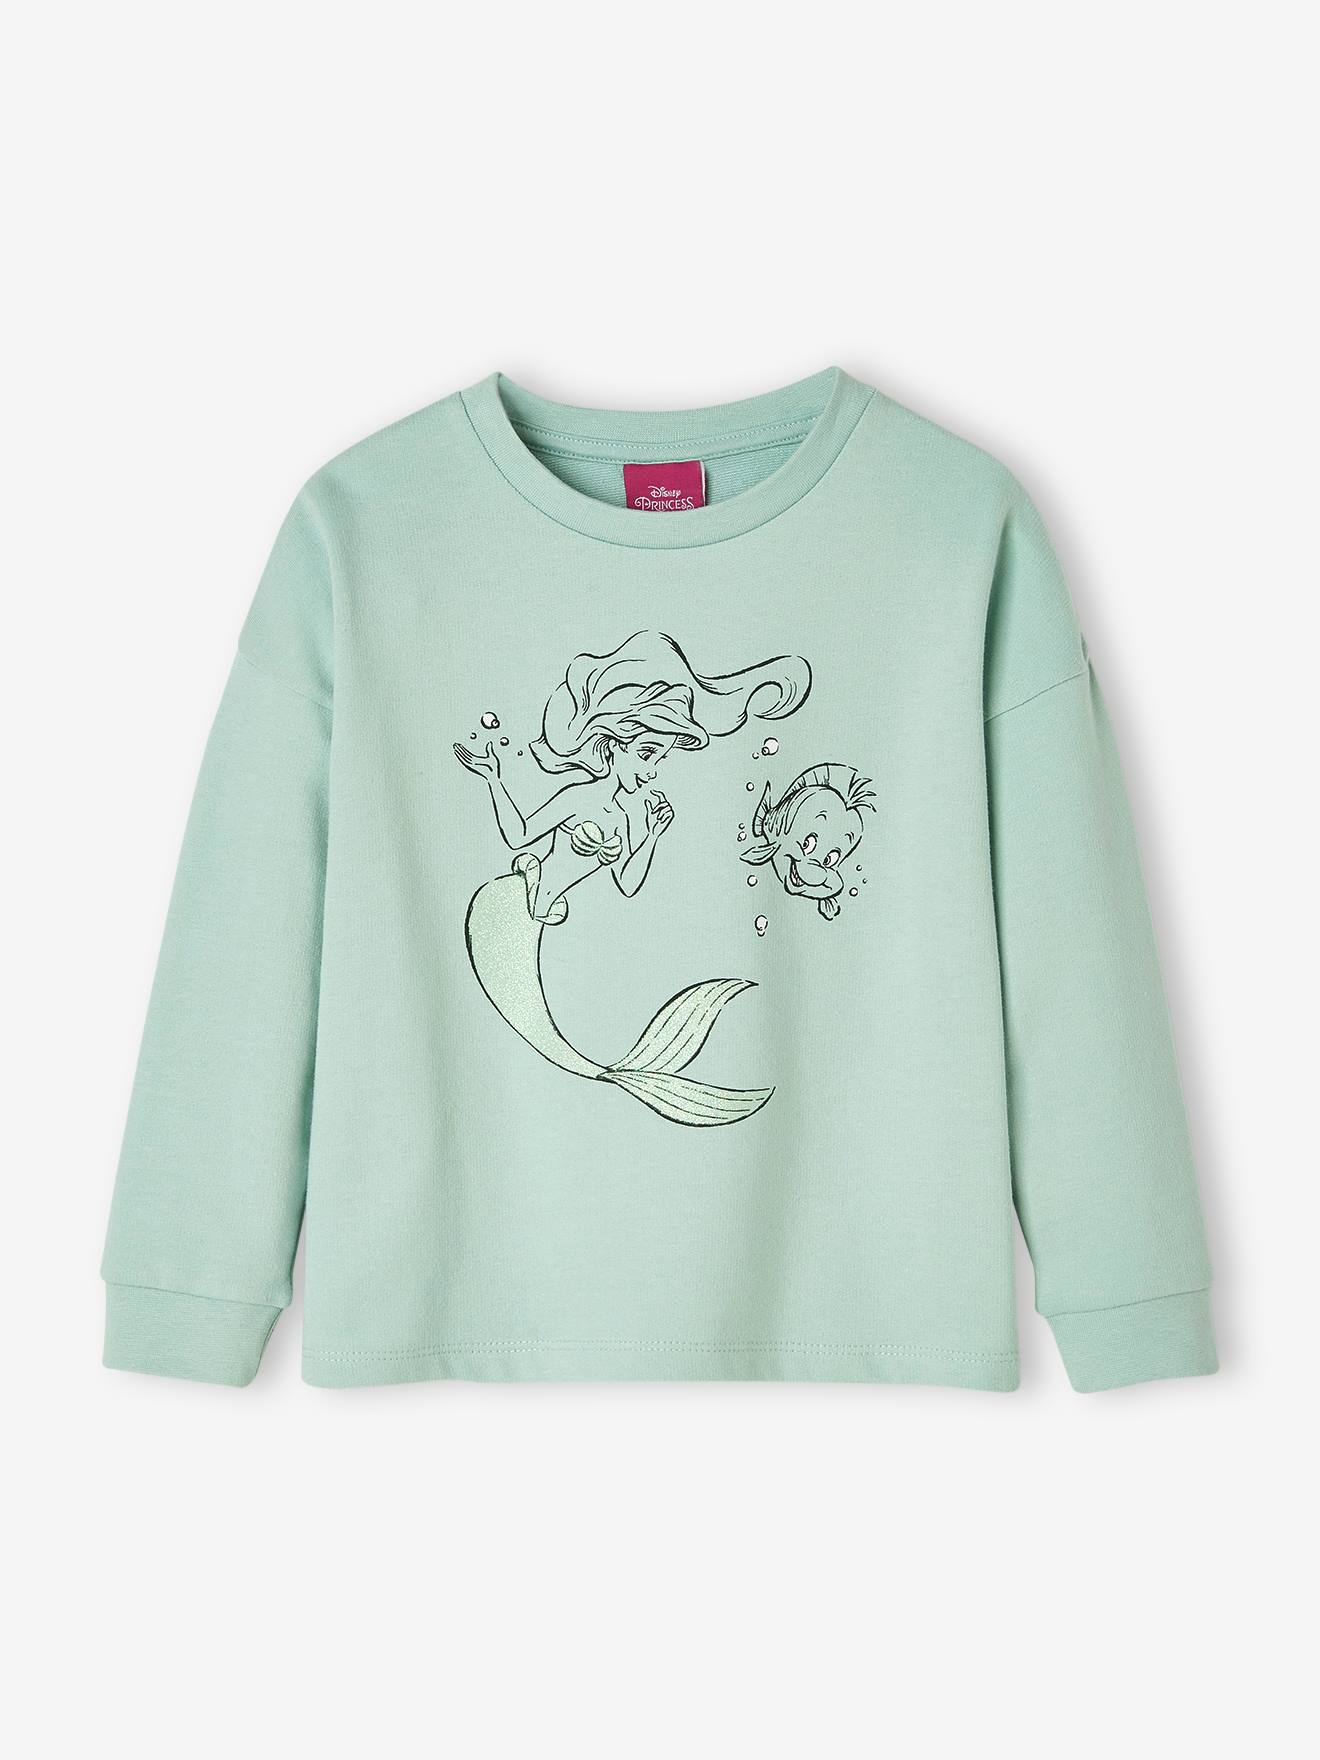 The Little Mermaid Sweatshirt for Girls, by Disney(r) crystal blue